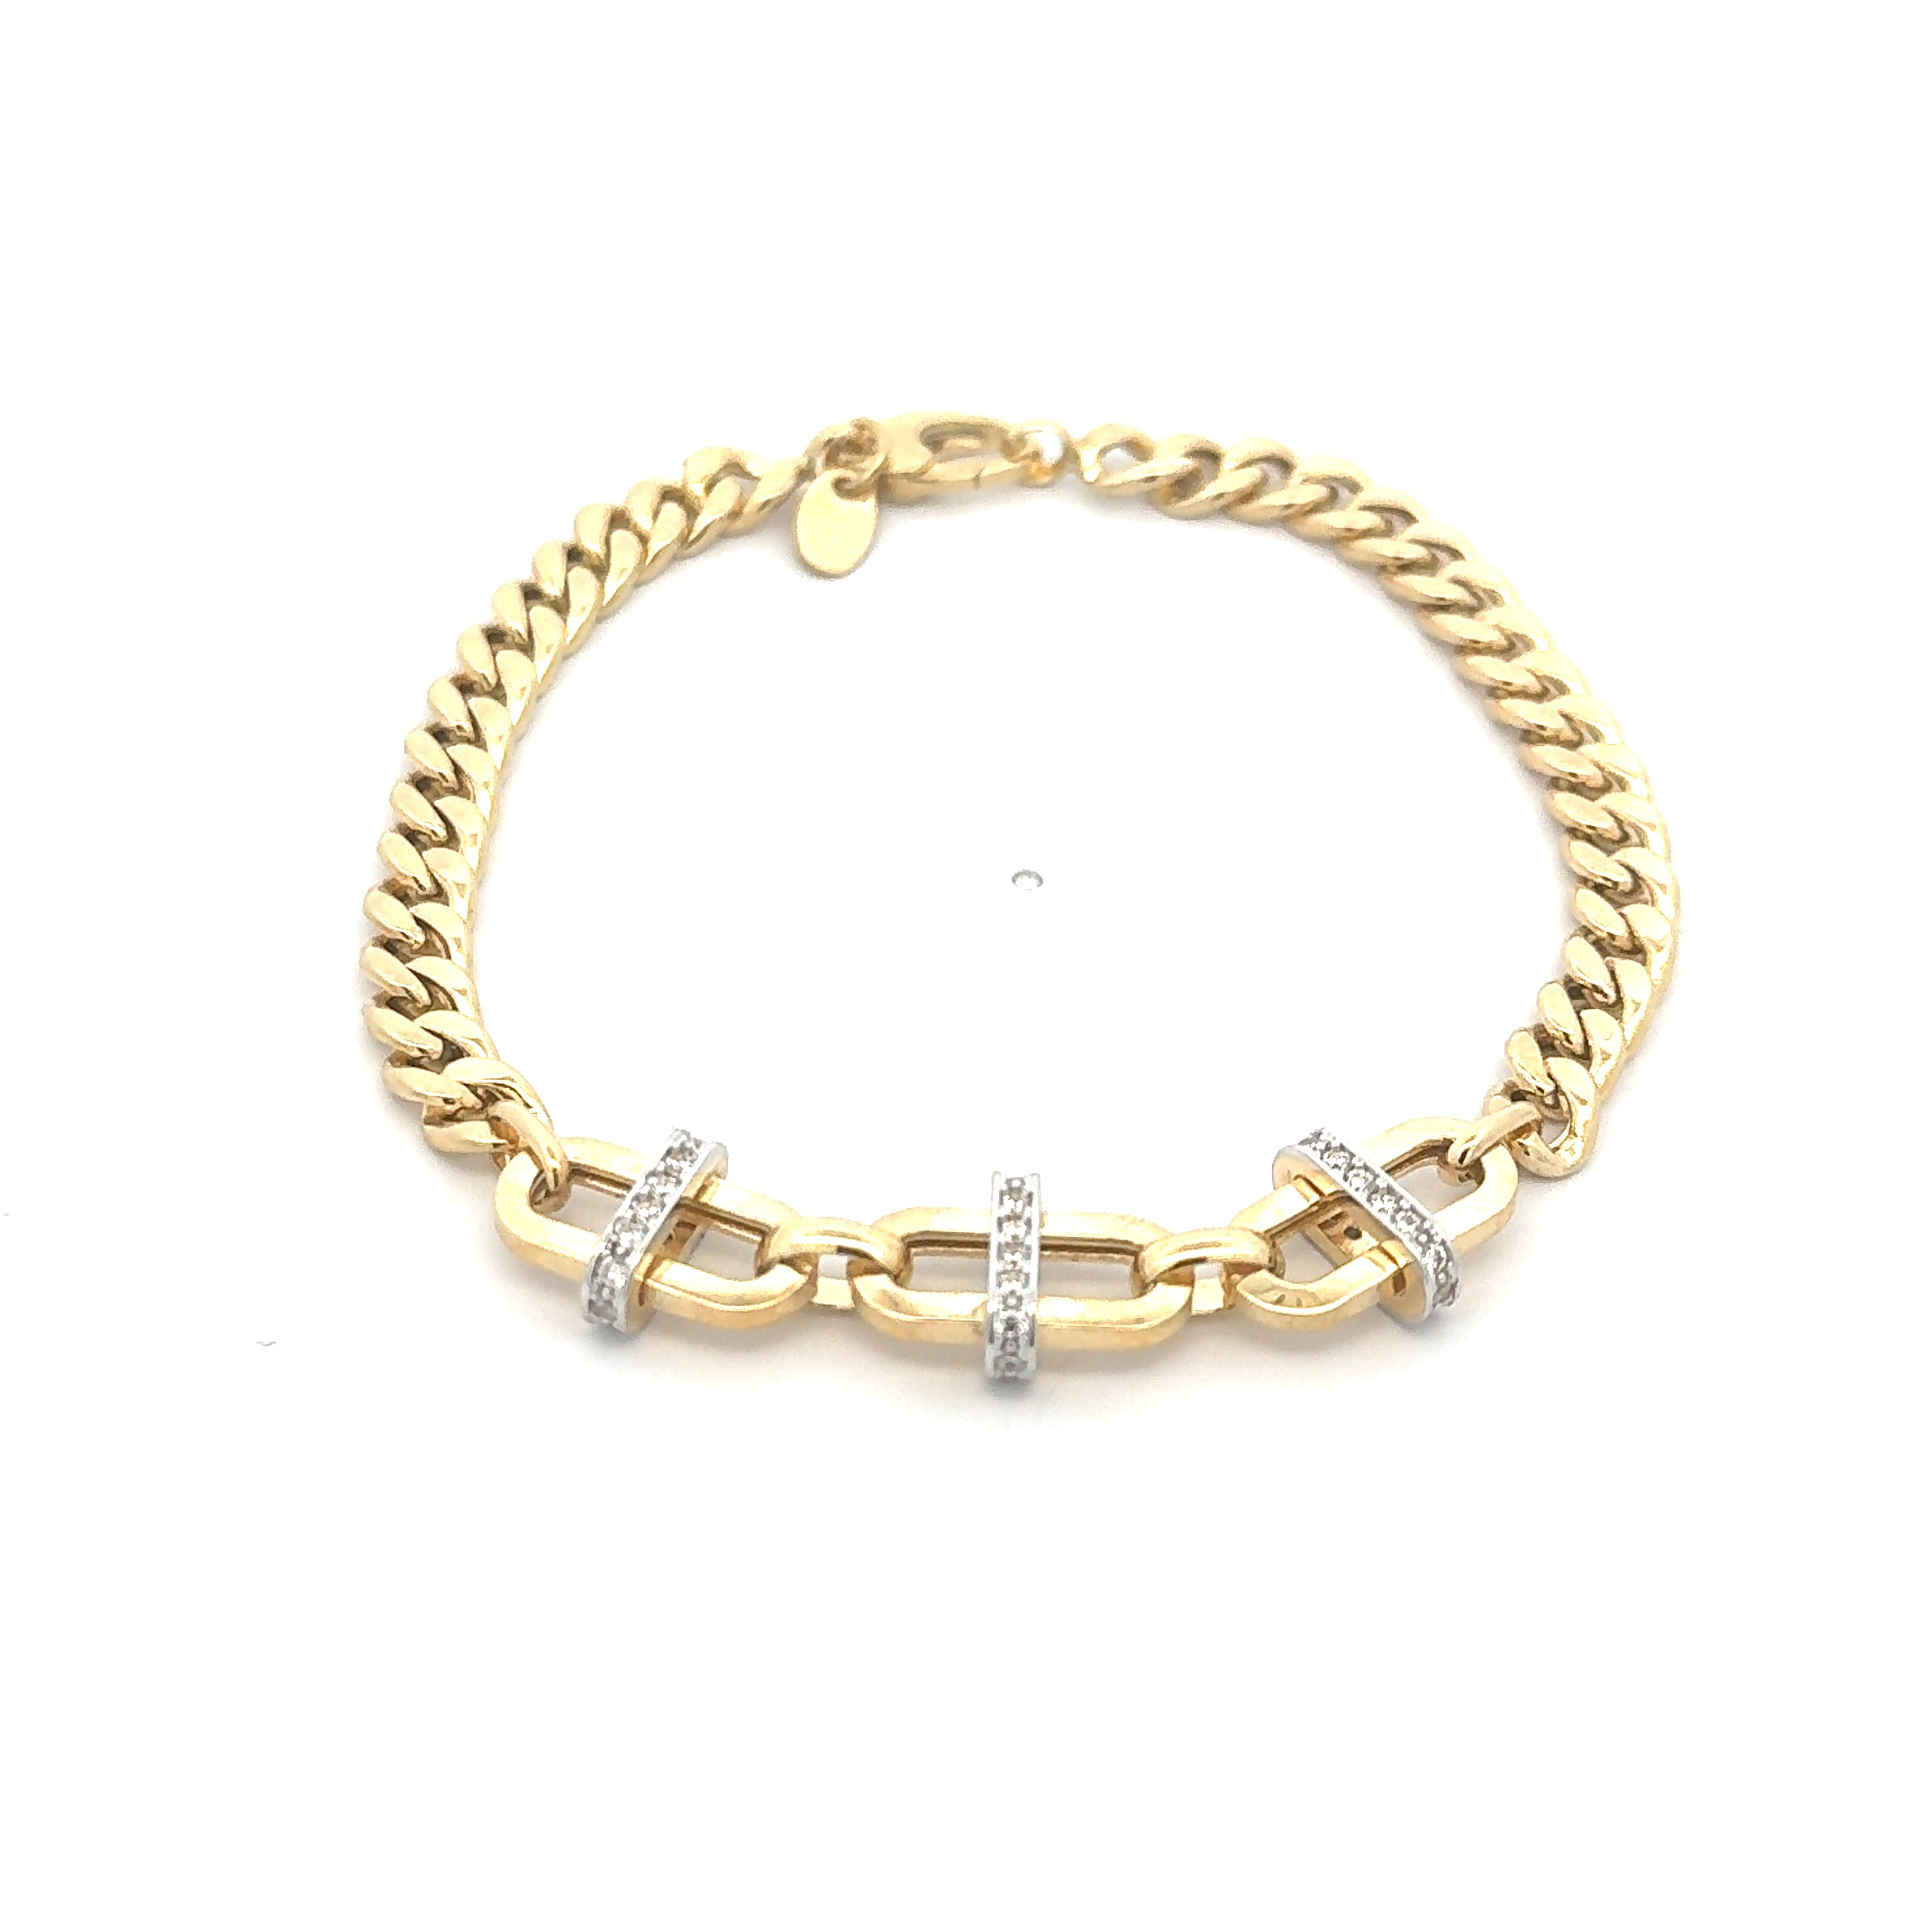 Mikala Cz ladies 10K Gold bracelet